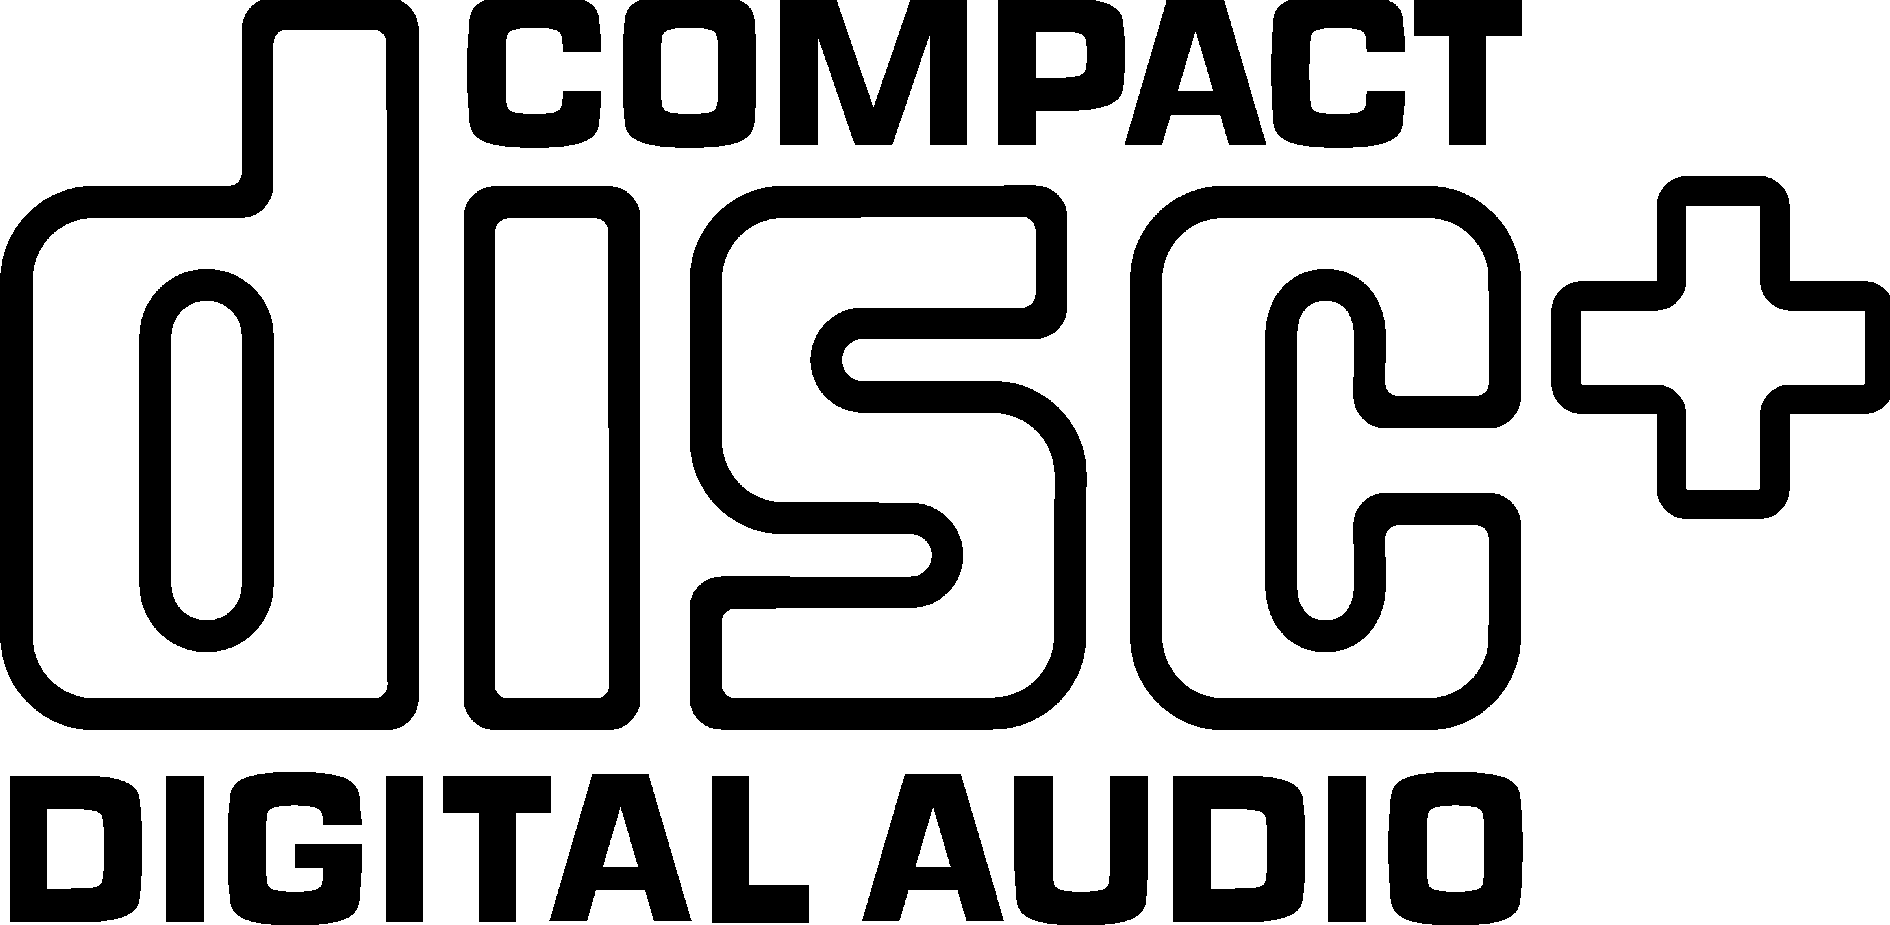 File:CD-AUDIO logo.png